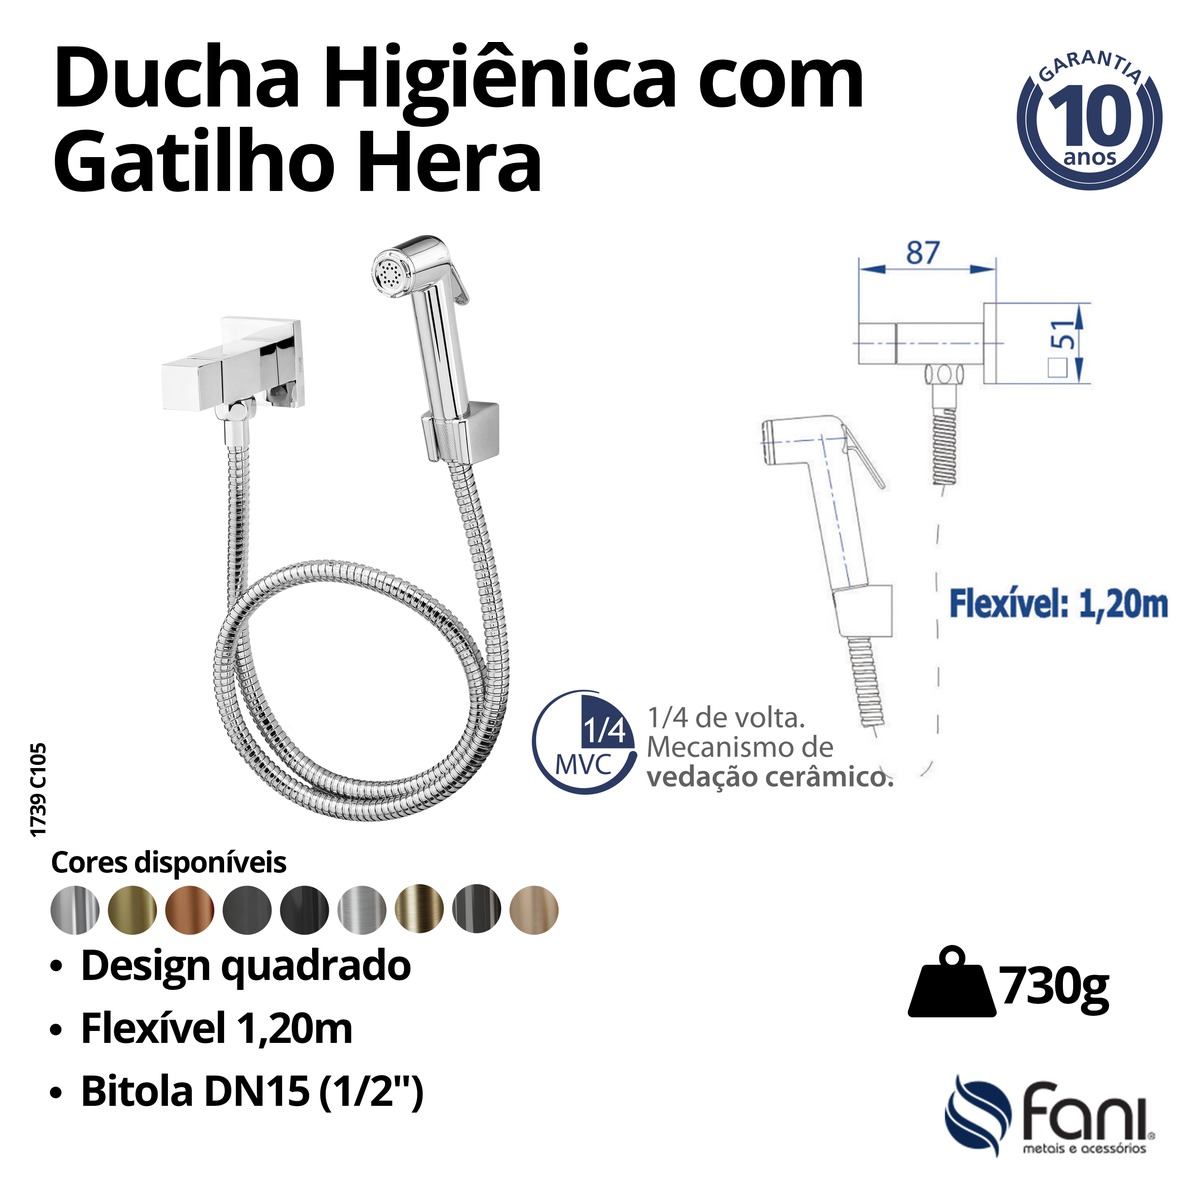 Ducha Higiênica Gatilho ABS Hera 1739OV105 Ouro Velho Fani